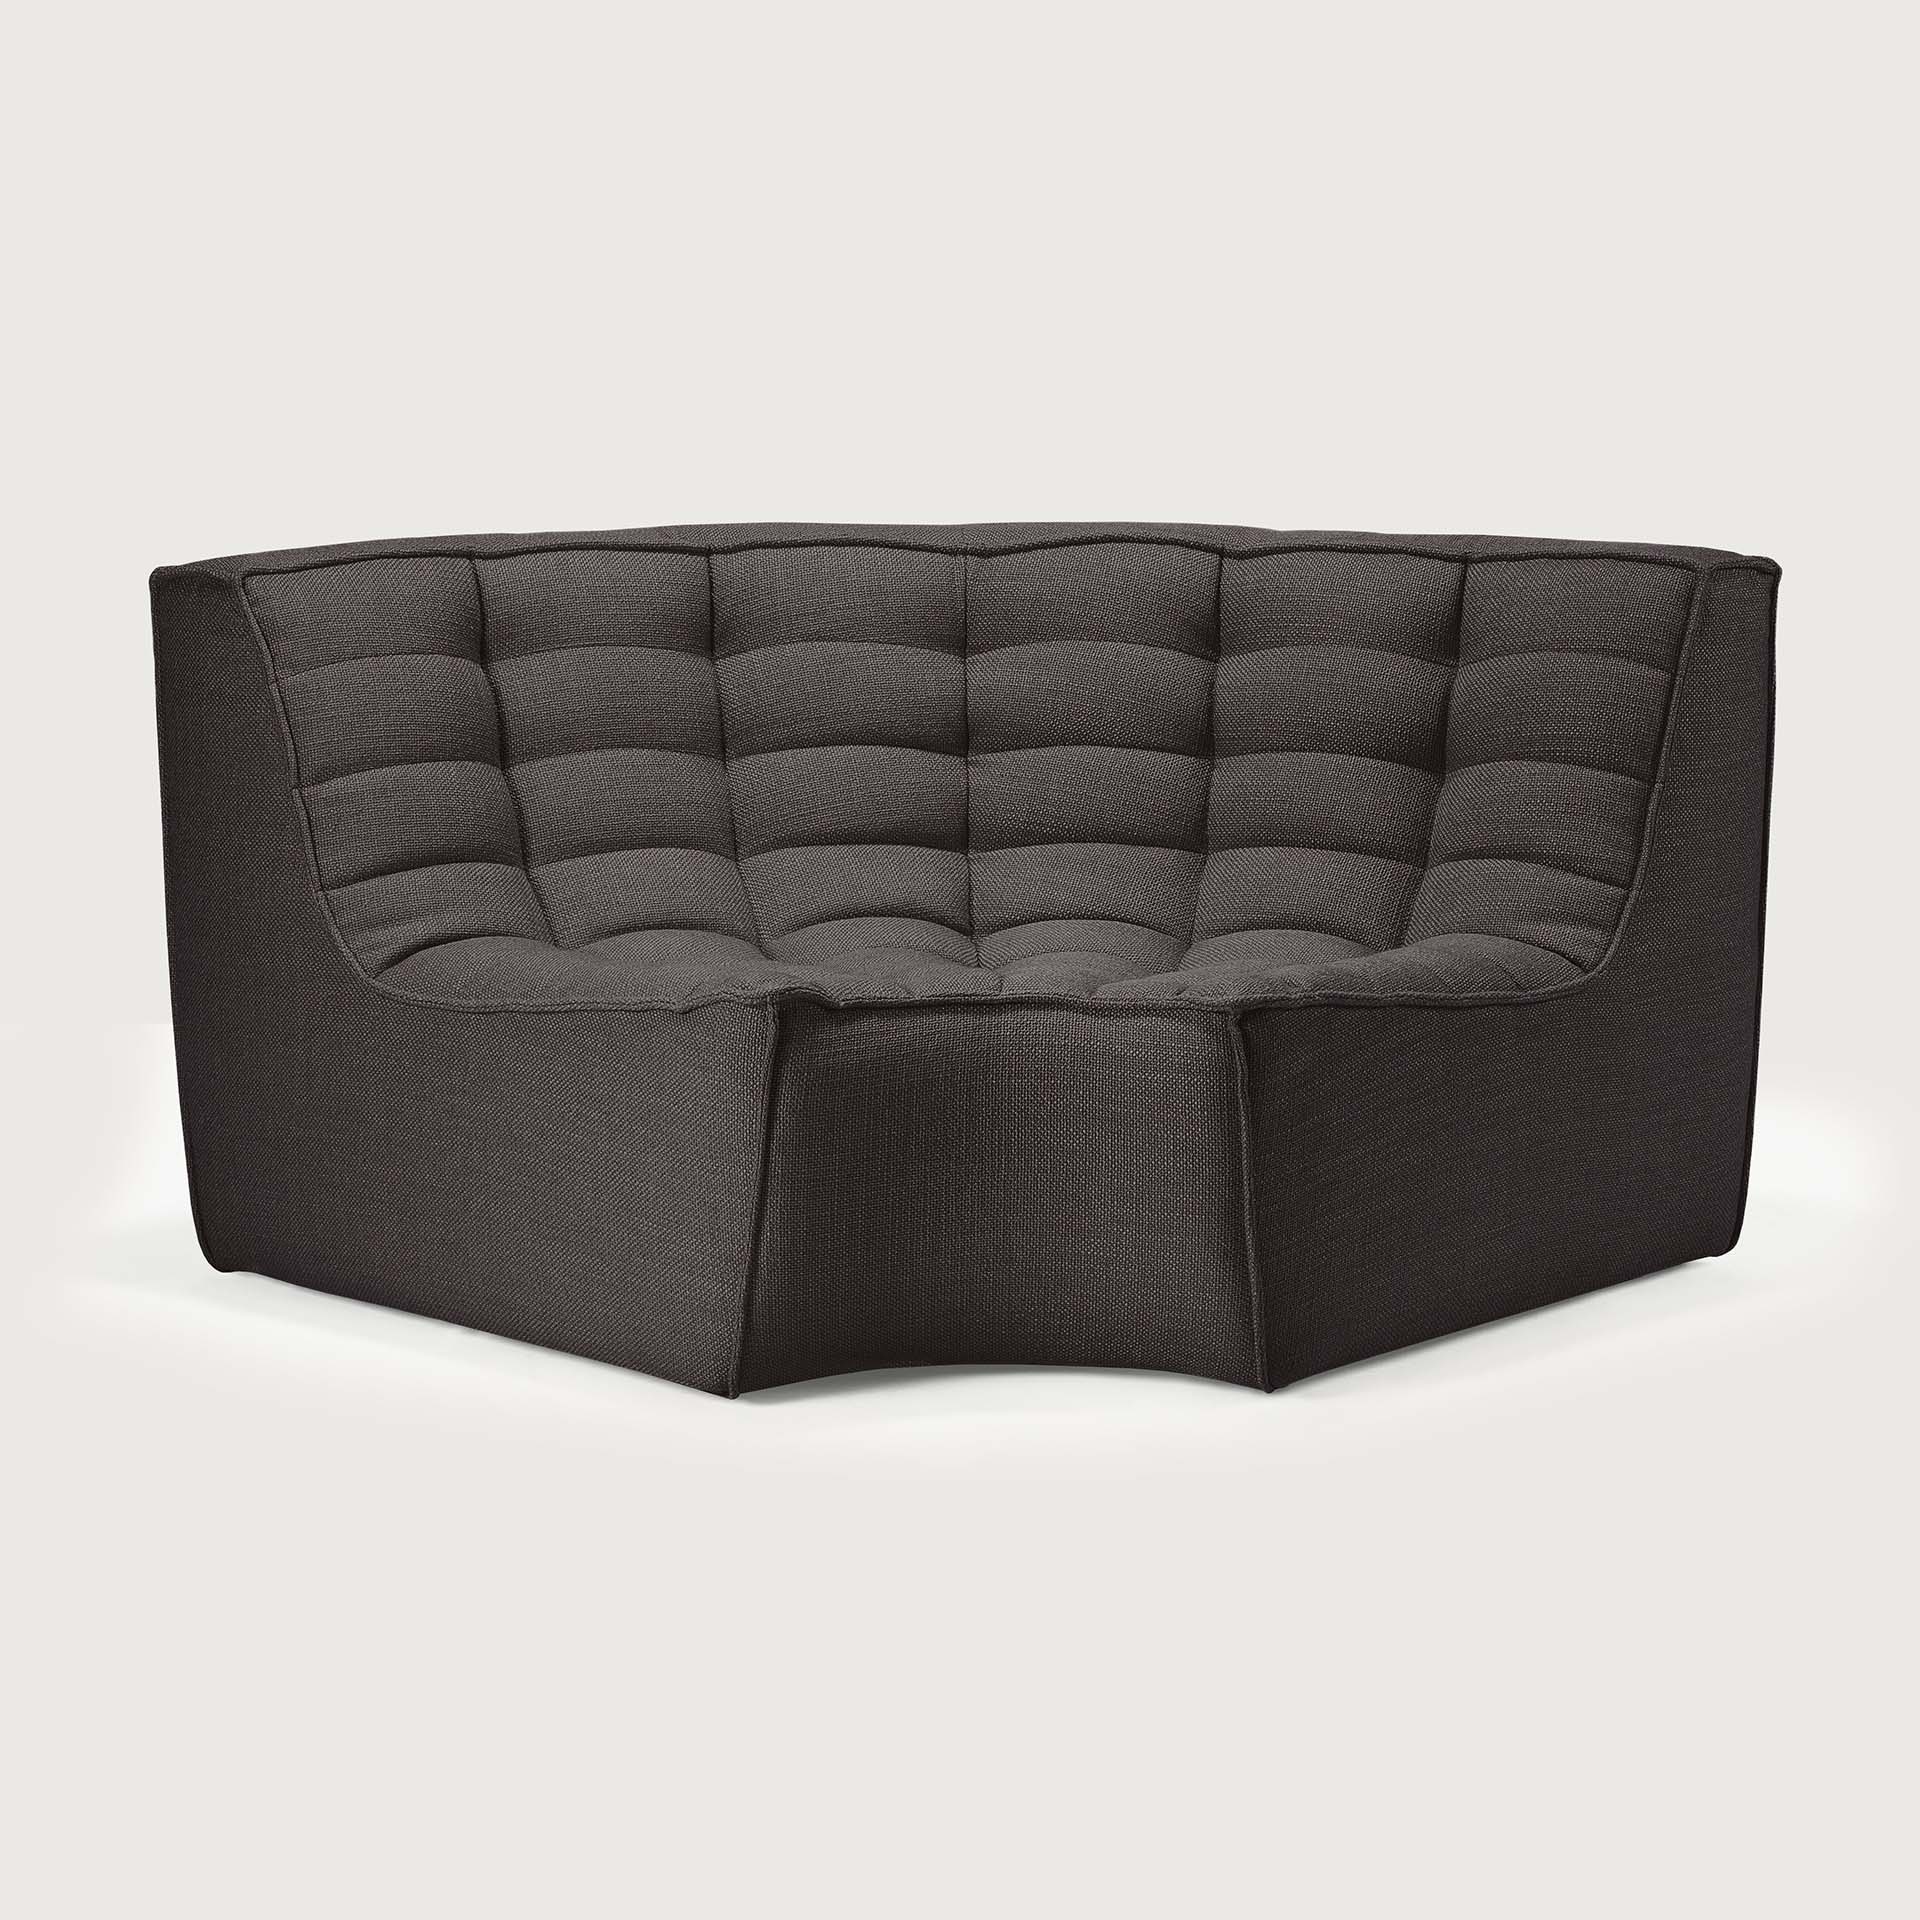 [20213*] N701 sofa - round corner (Dark grey)